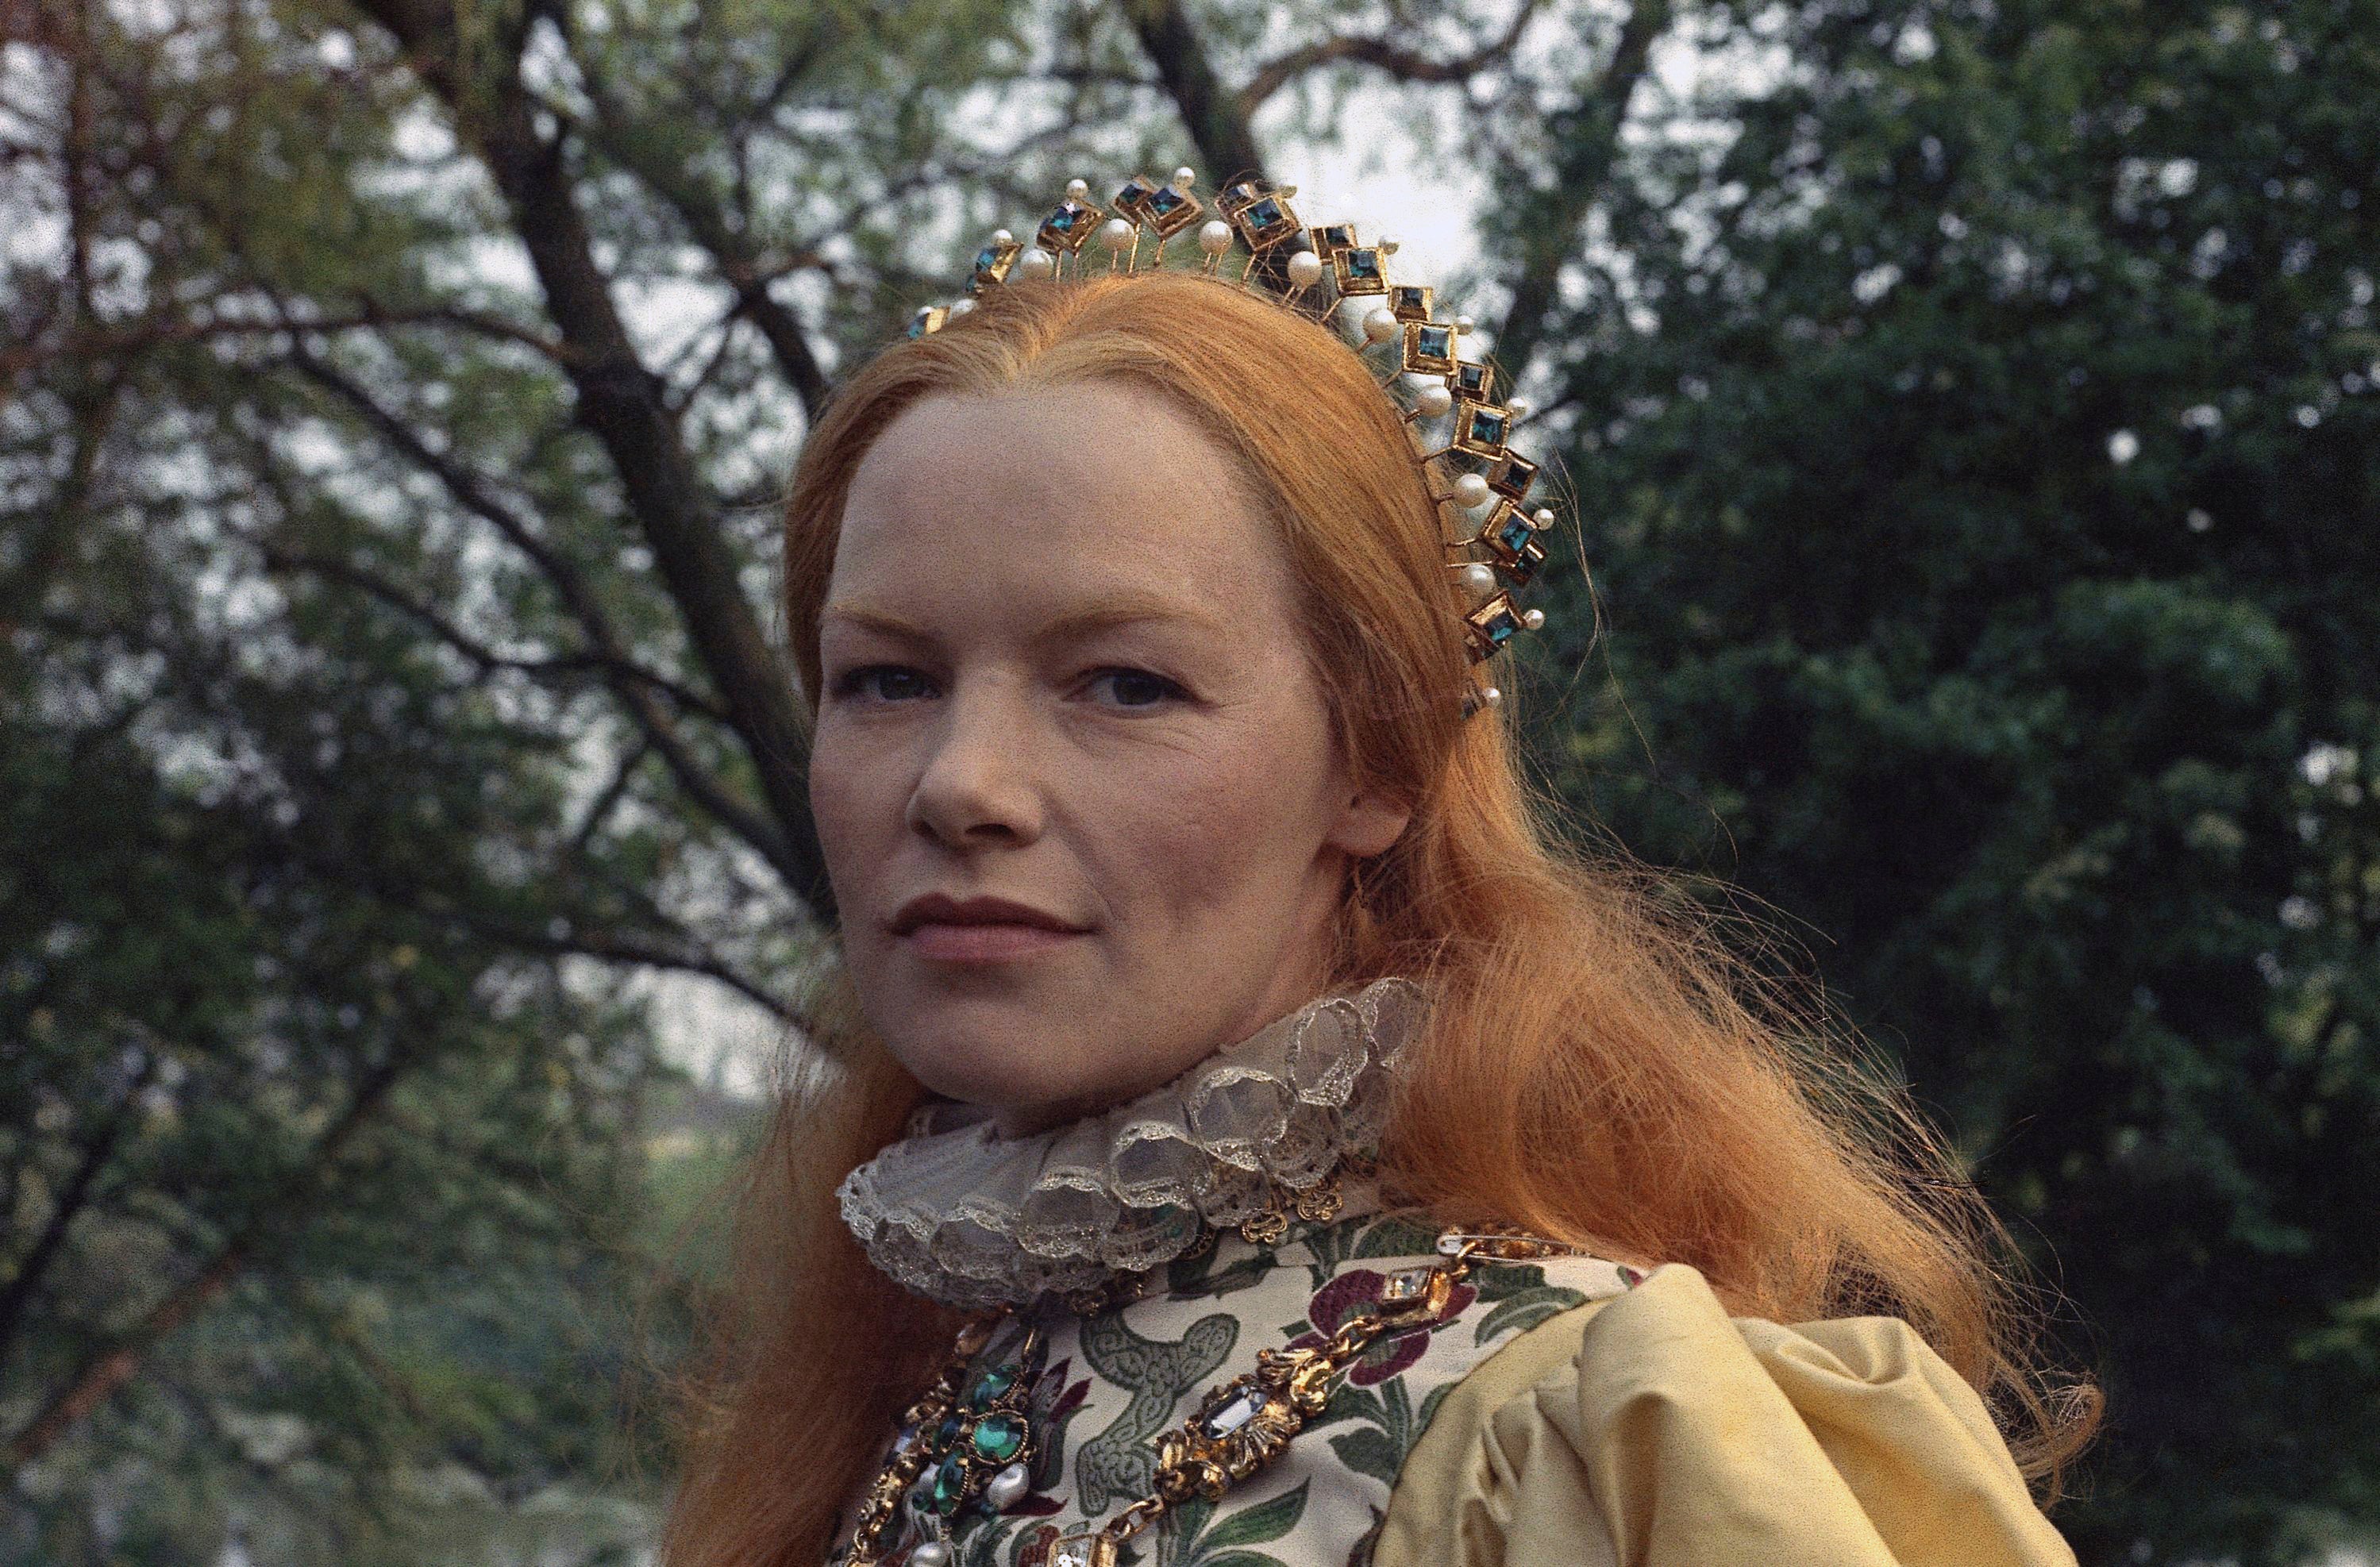 Glenda Jackson as Queen Elizabeth I in the 1971 film ‘Mary, Queen of Scots’